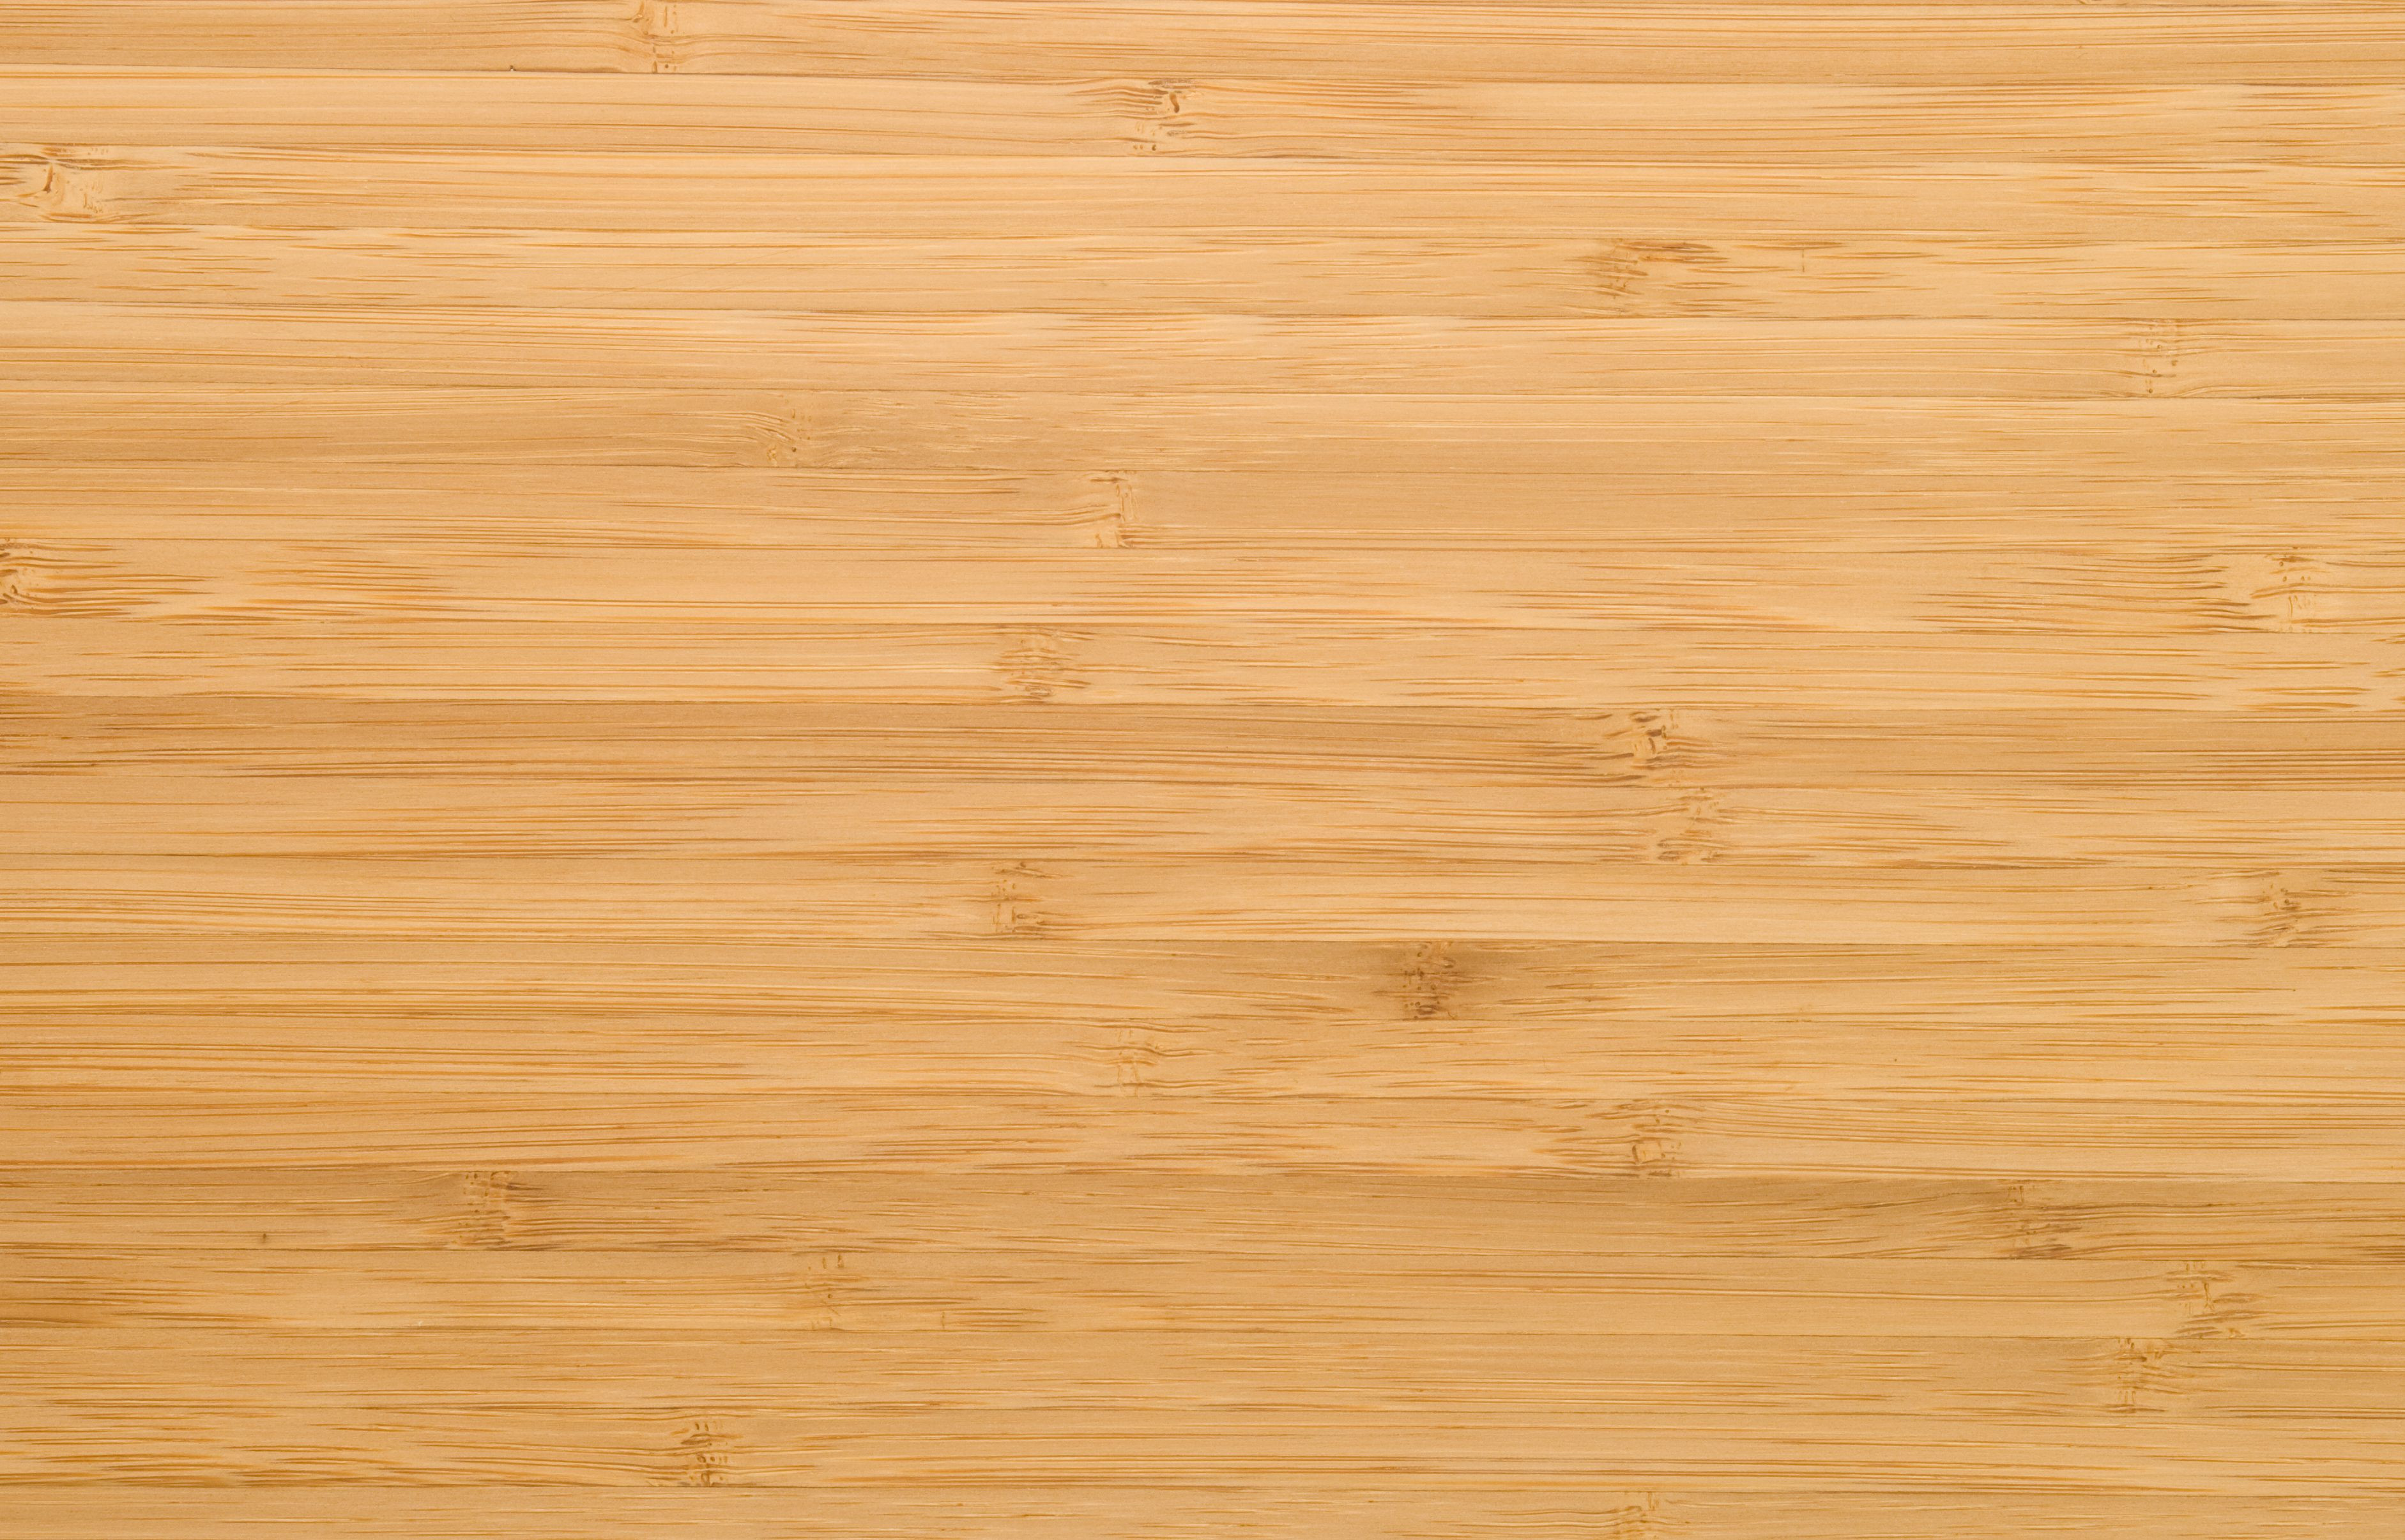 Hardwood Floor Colors Pinterest Of Can You Use A Wet Mop On Bamboo Floors Regarding Natural Bamboo Plank 94259870 59aeefd4519de20010d5c648